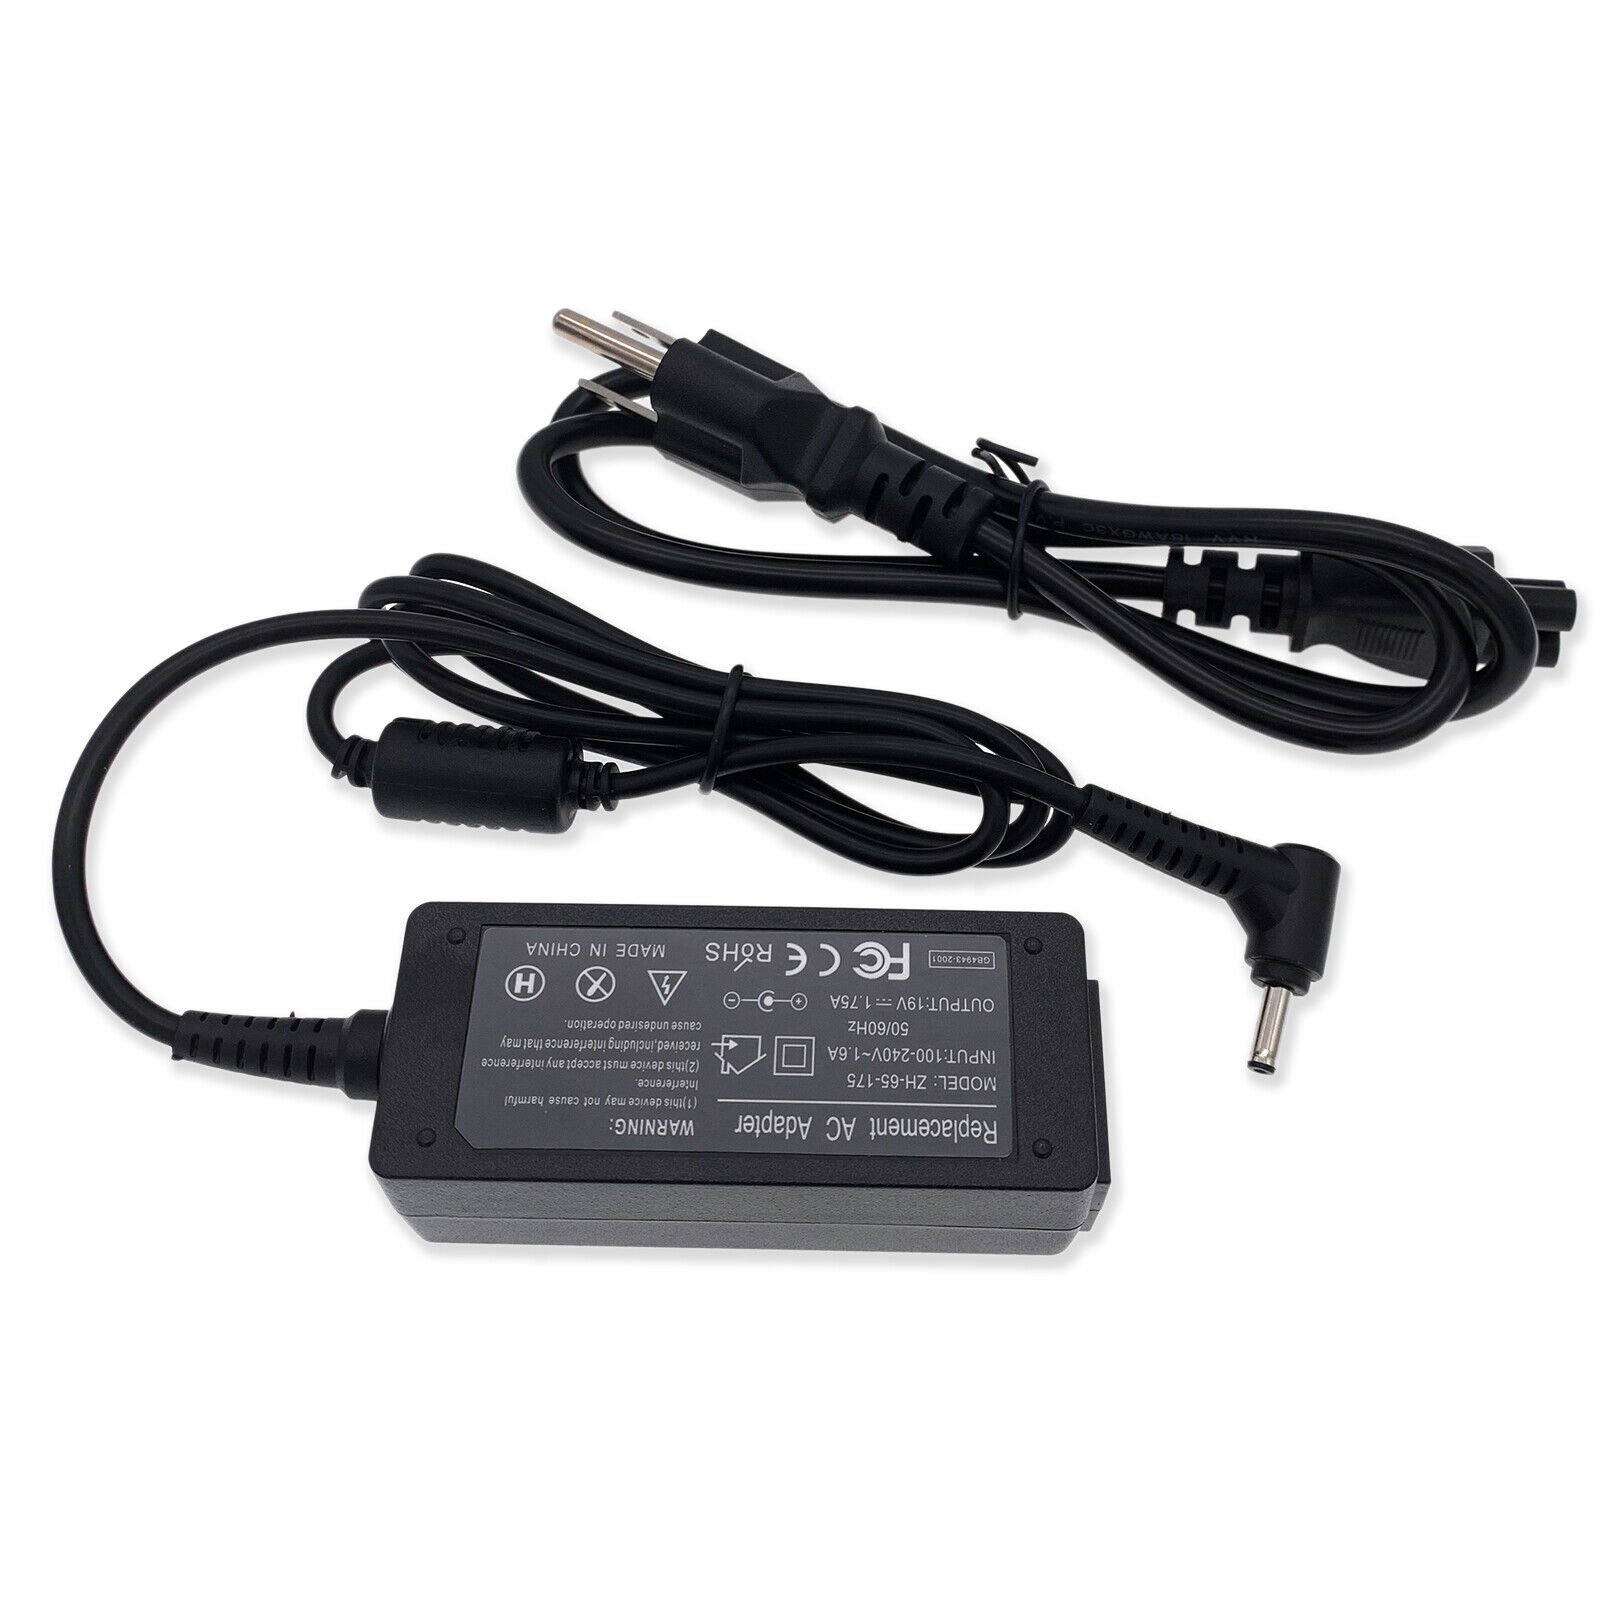 For ASUS E410 E410M E410MA E410MA-TB Laptop Charger AC Adapter Power Supply Cord